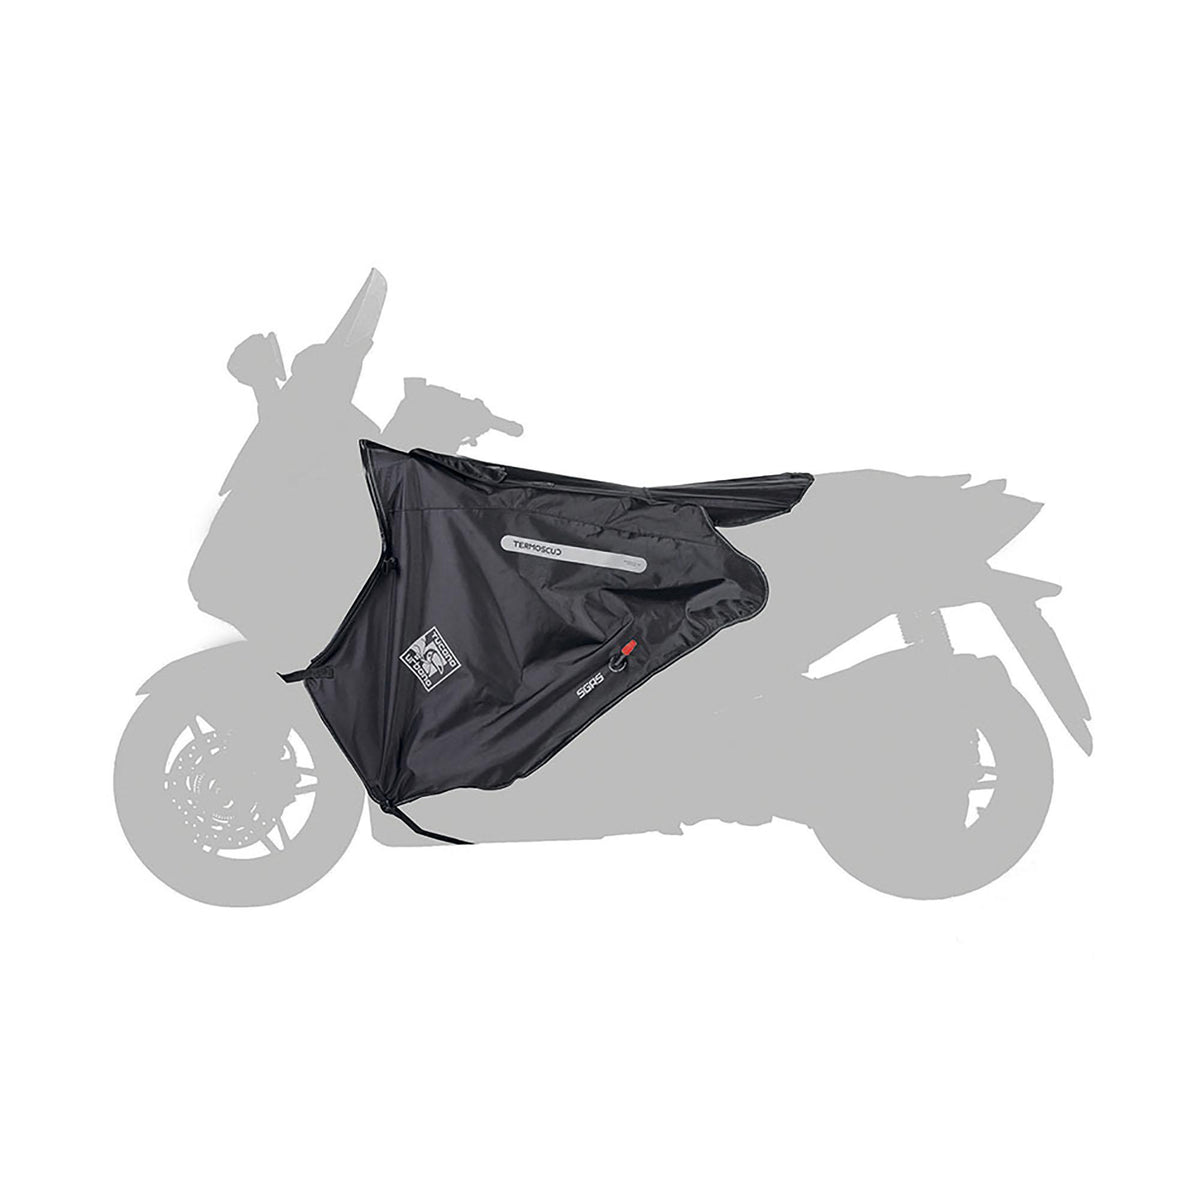 Termoscud® EASY E19 Cubrepiernas Negro, cubrepiernas genérico para scooter con estribo plano